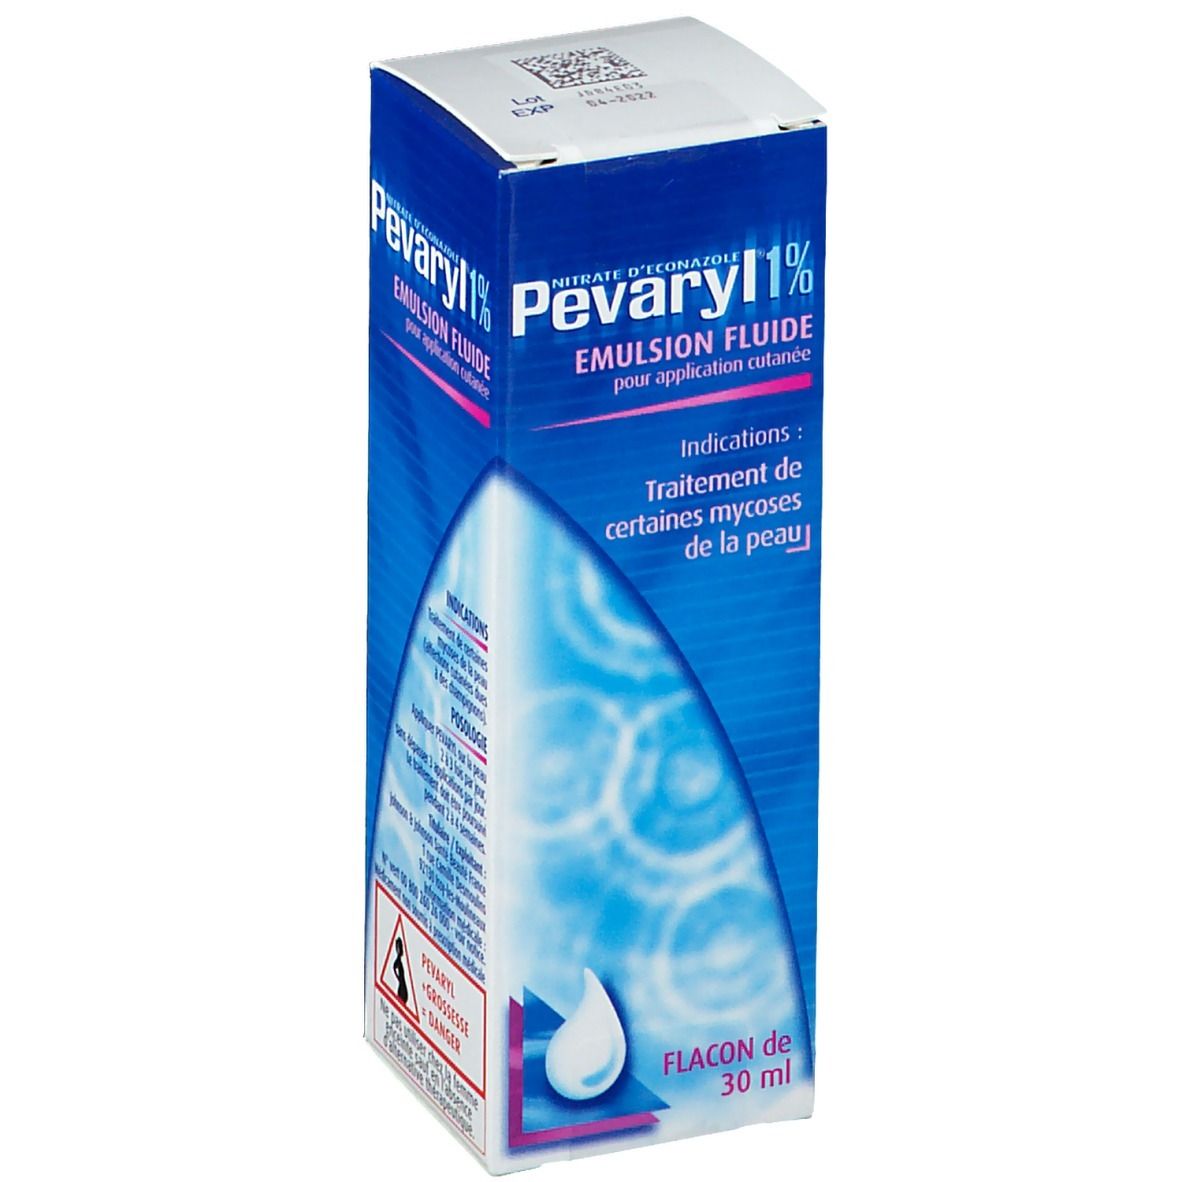 Pevaryl 1% emulsion fluide